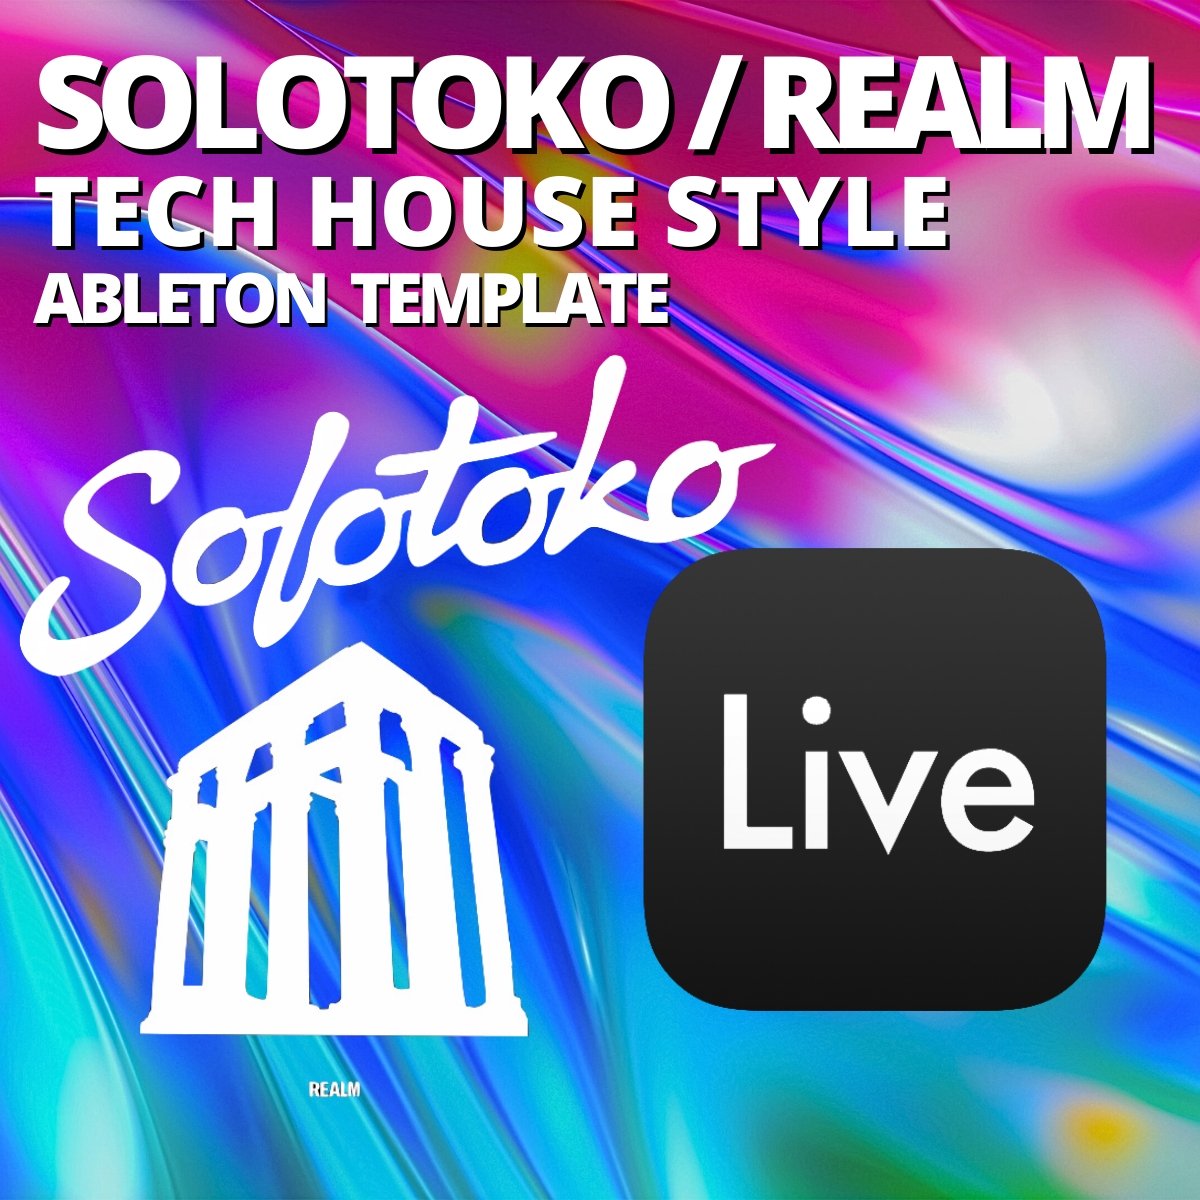 SOLOTOKO - REALM / Tech House - Unconventional - Scraps Audio